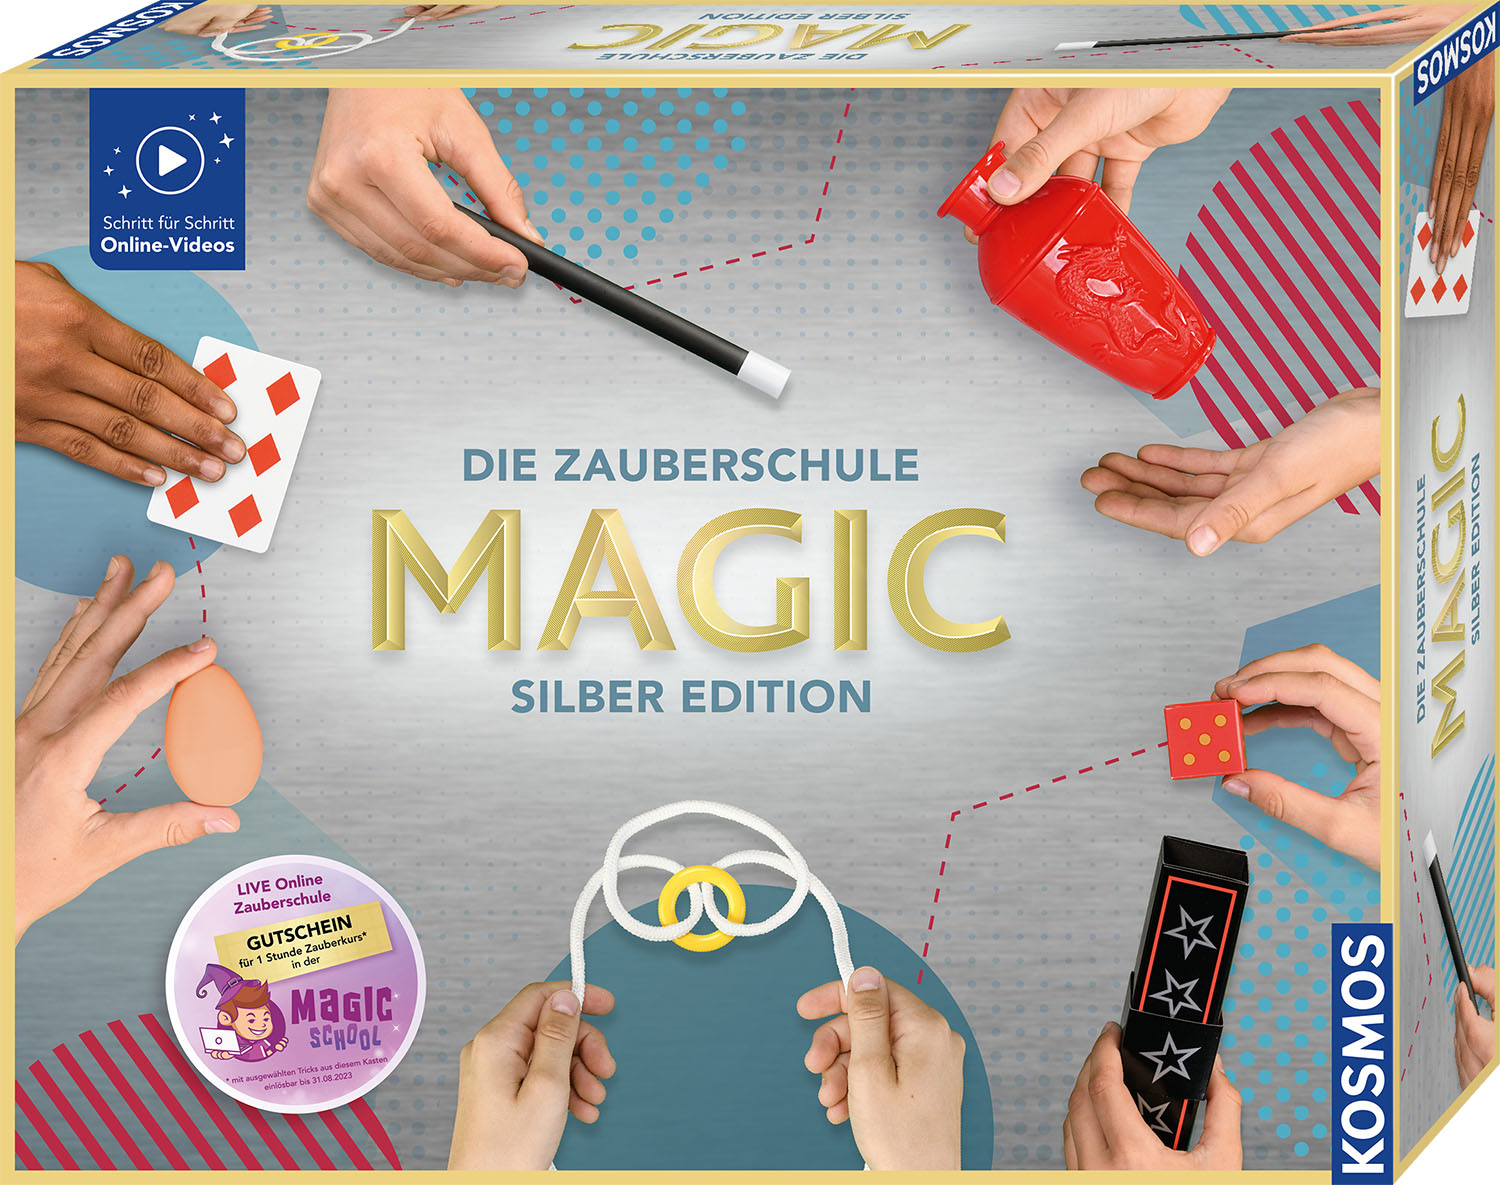 Die Zauberschule Magic - Silber Edition